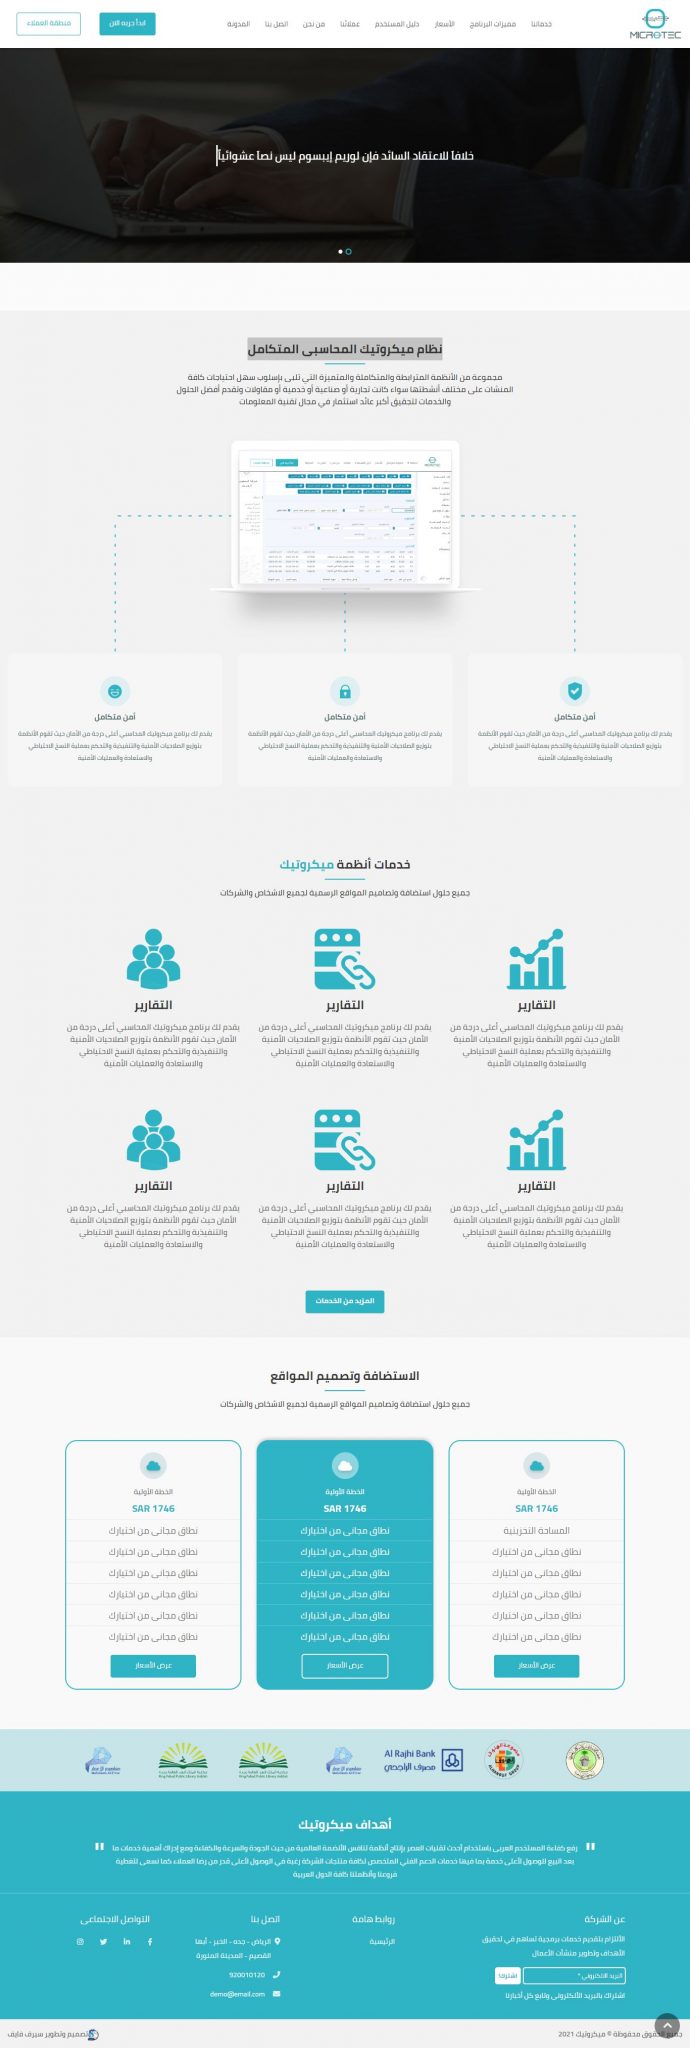 Mikrotik accounting website design